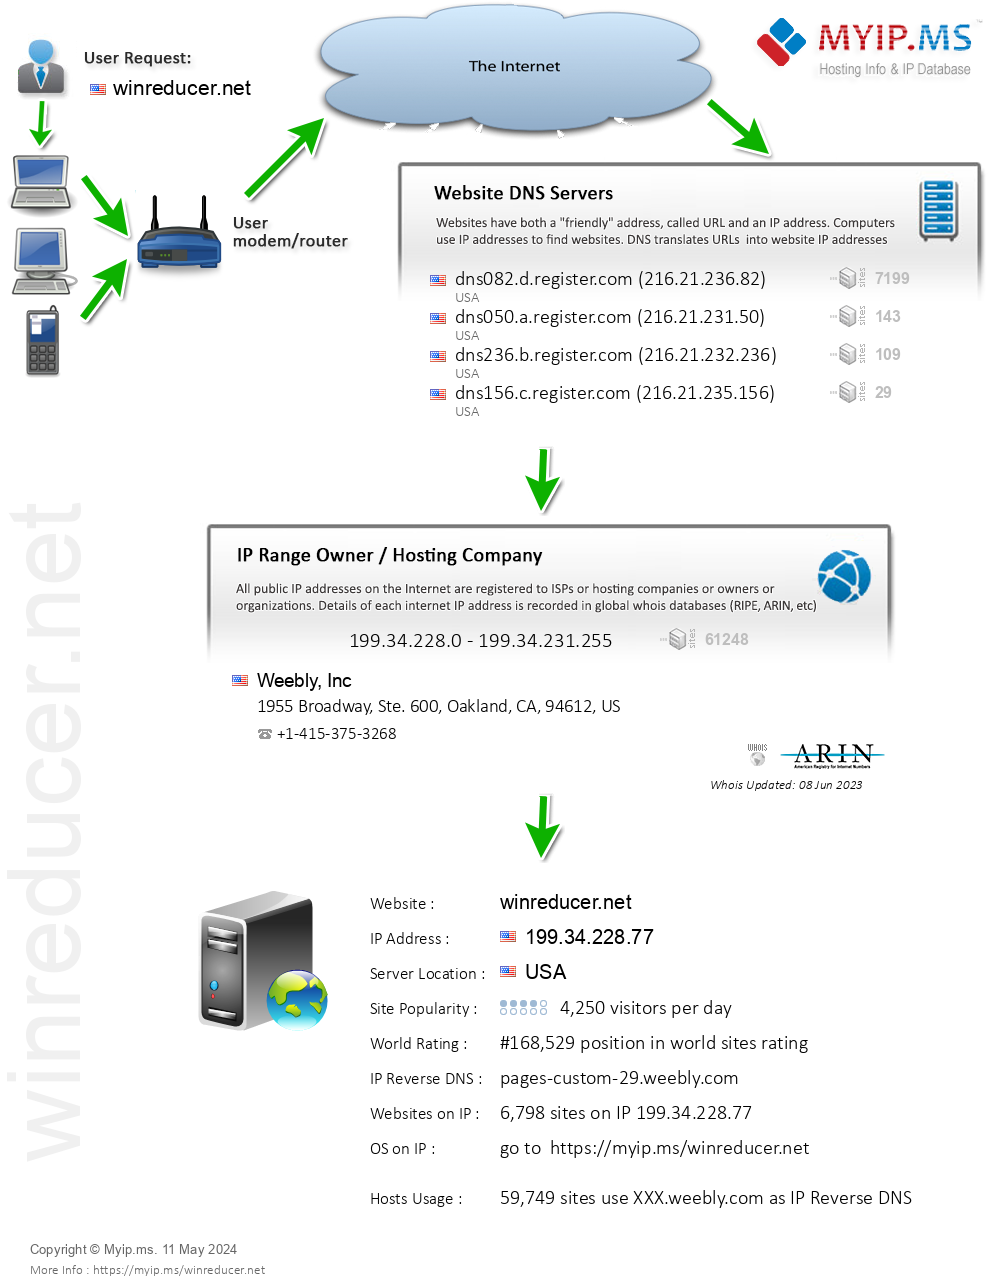 Winreducer.net - Website Hosting Visual IP Diagram